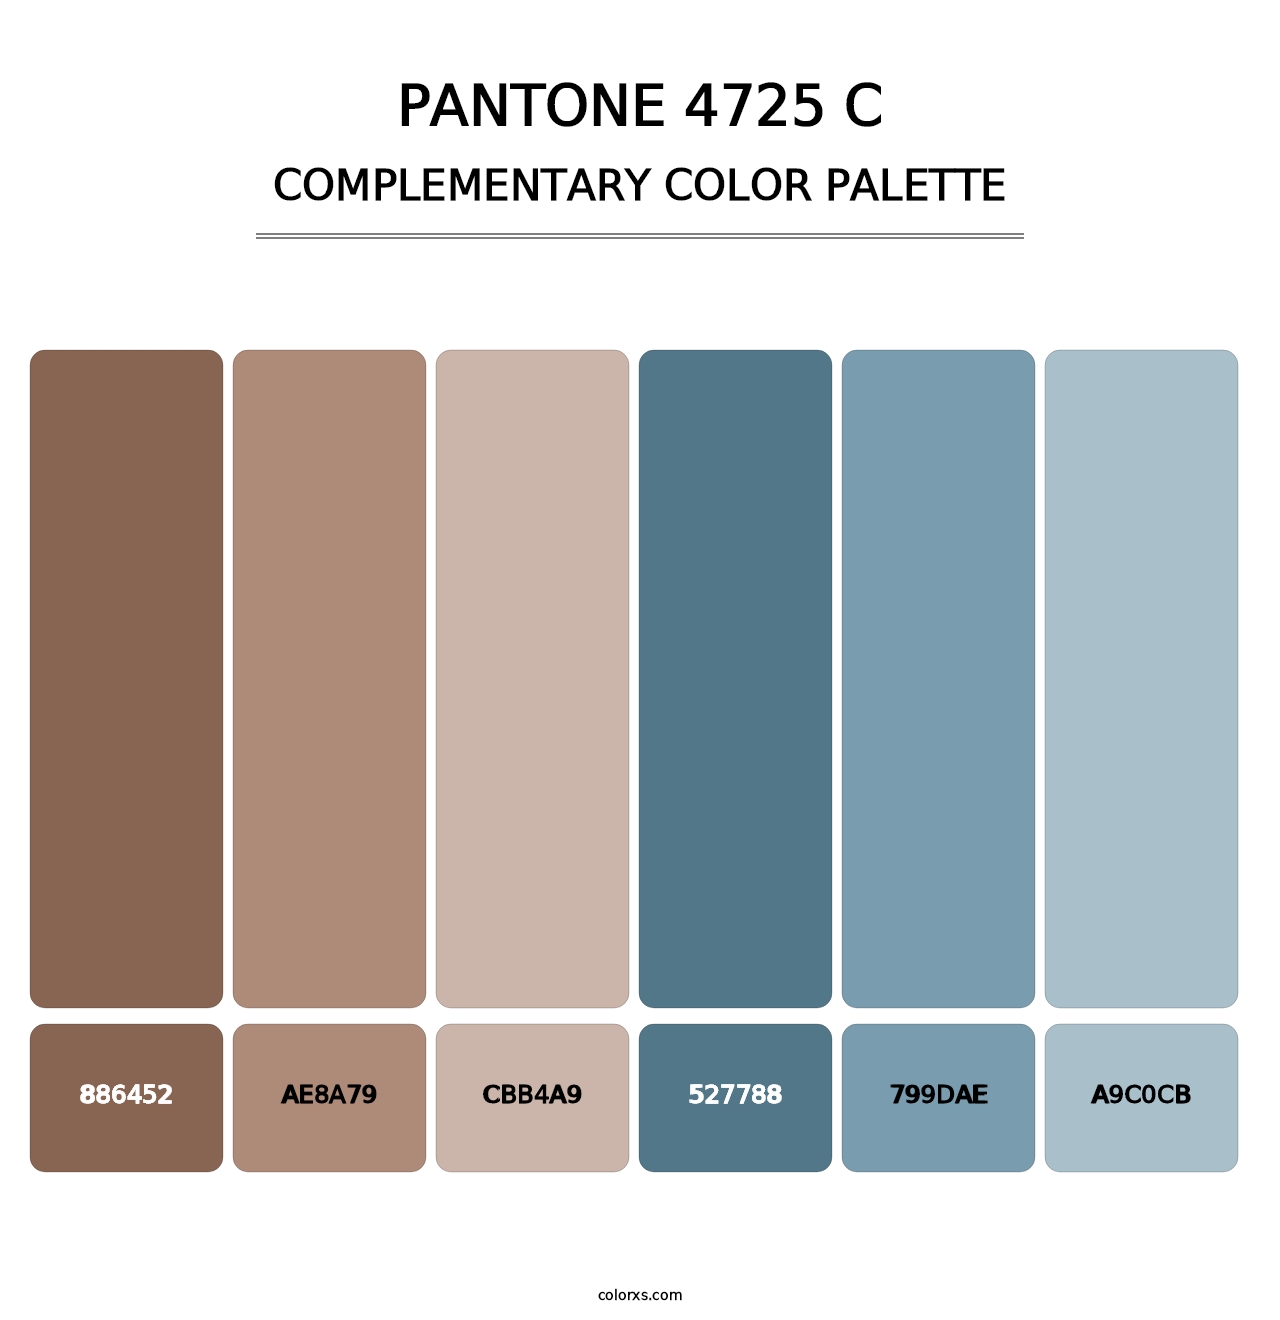 PANTONE 4725 C - Complementary Color Palette